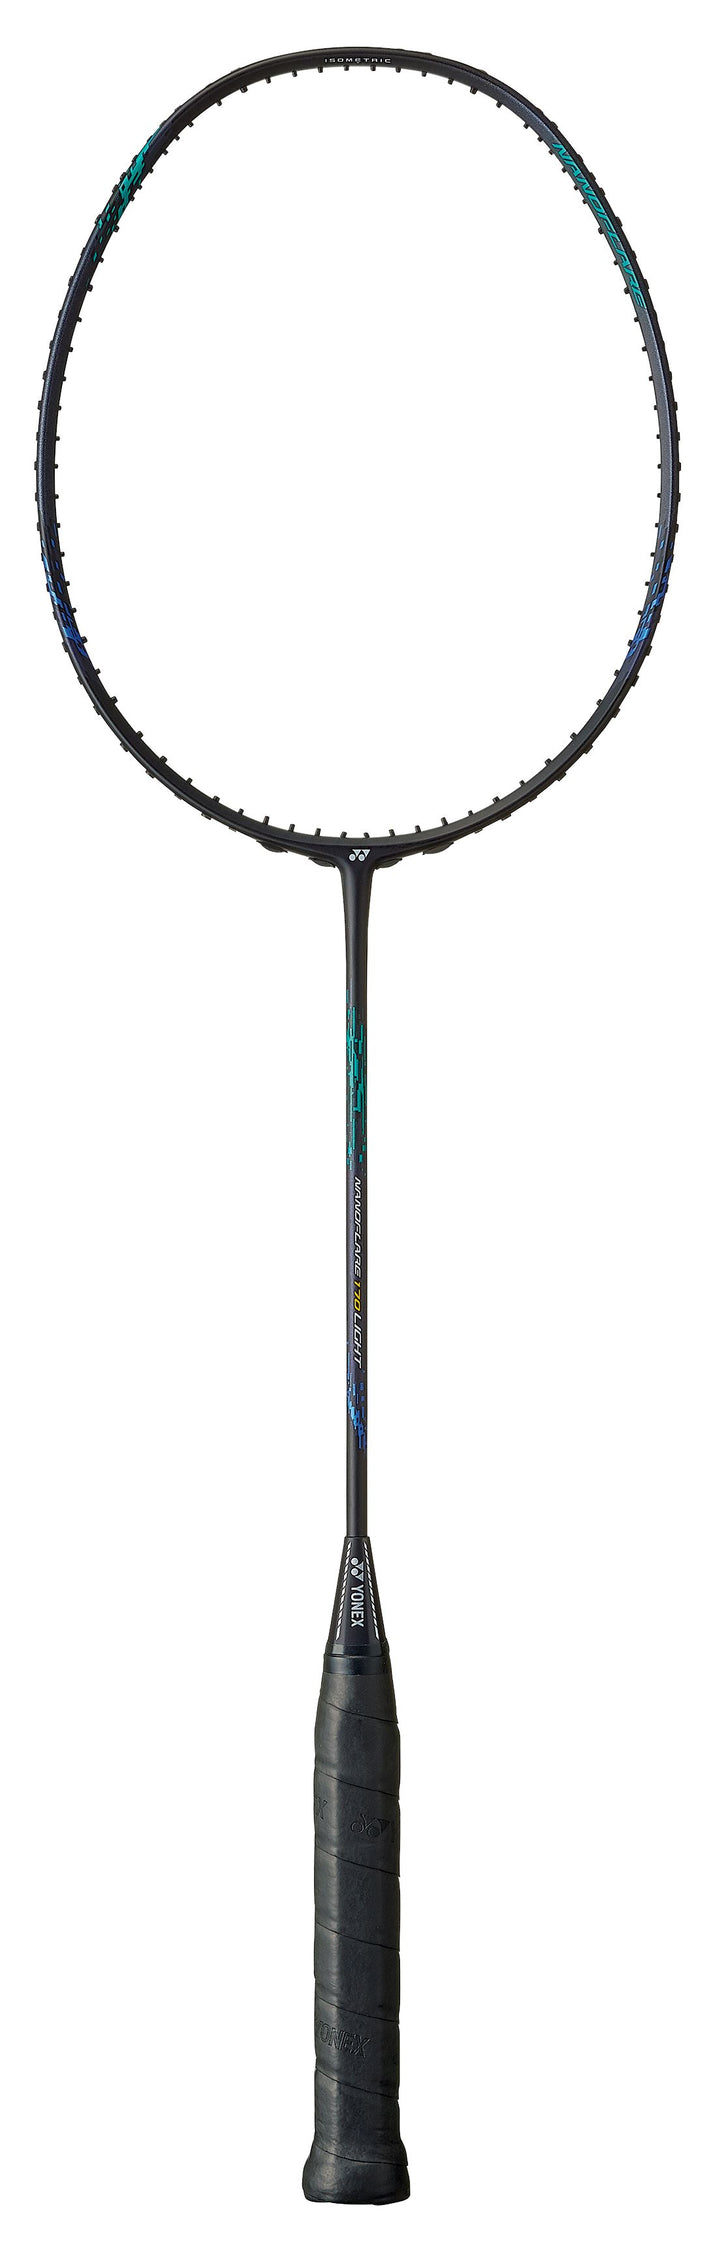 Yonex Nanoflare 170 Light 5U Badminton Racket Strung Badminton Racquets Yonex G5 Black Blue 